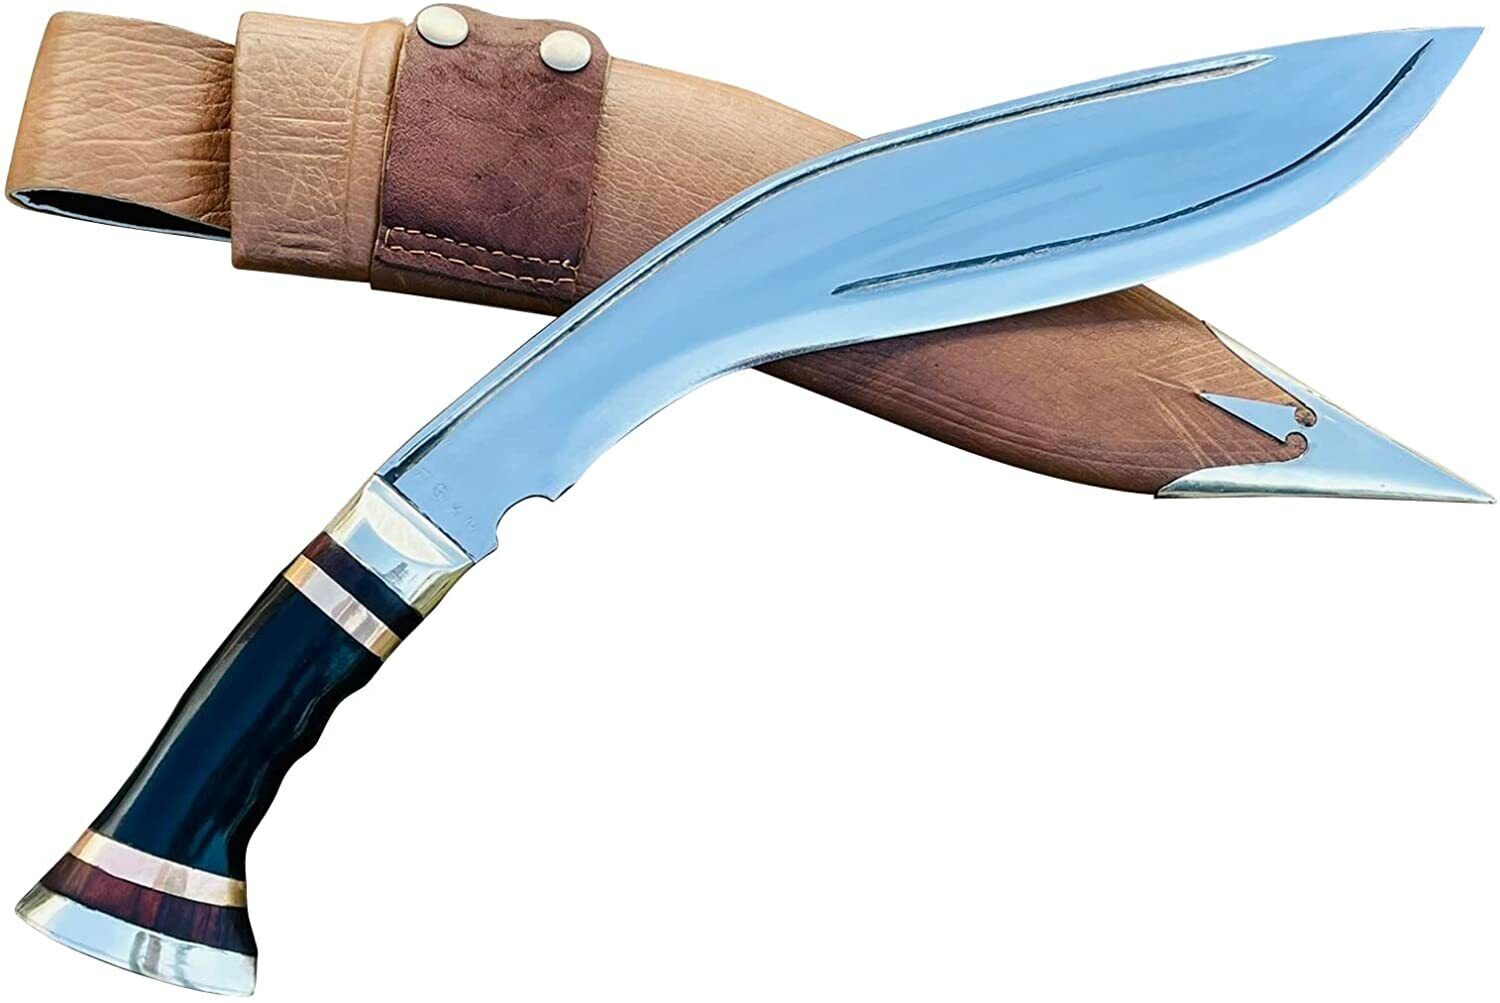 EGKH - 13” Blade 2 fullers Modify Best Khukuri - Hand forge Traditional Kukri